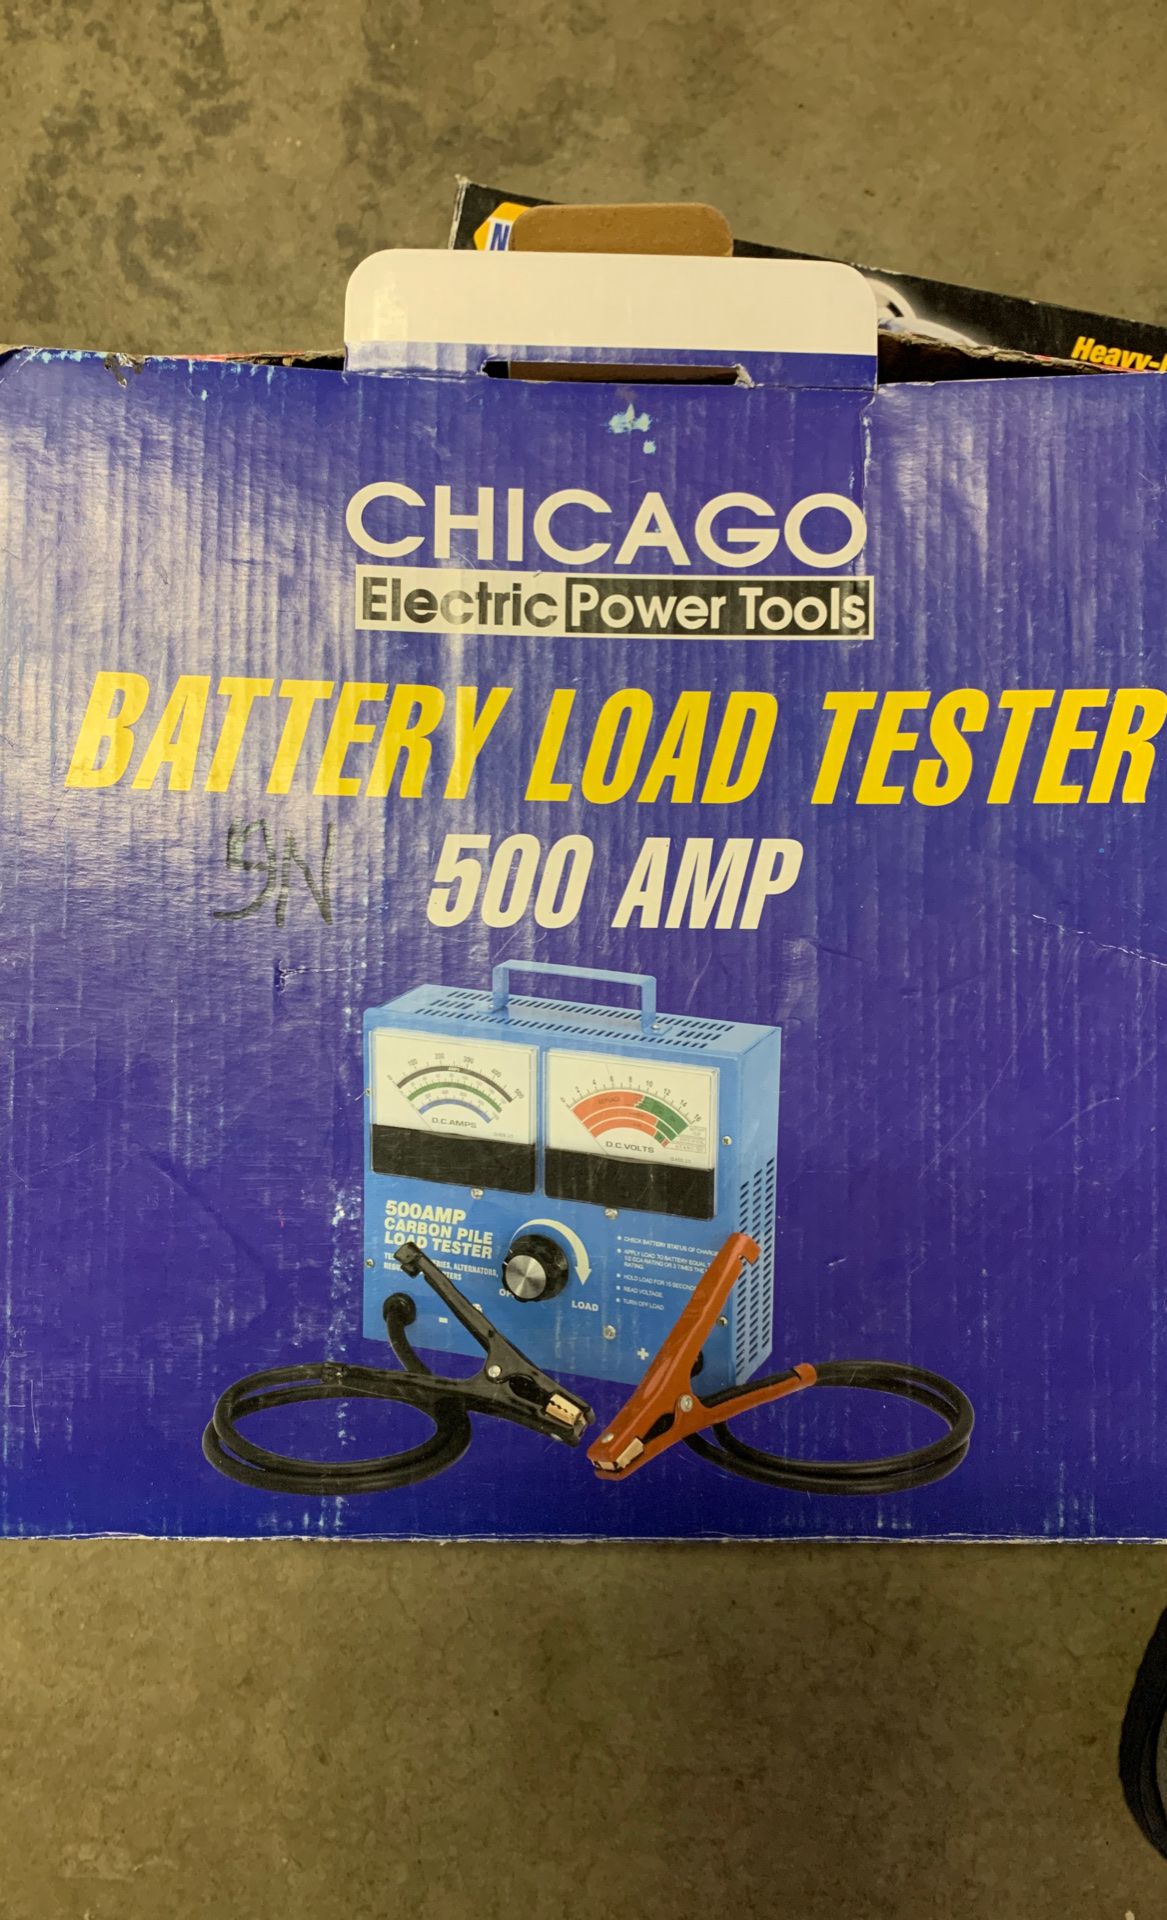 Battery load tester